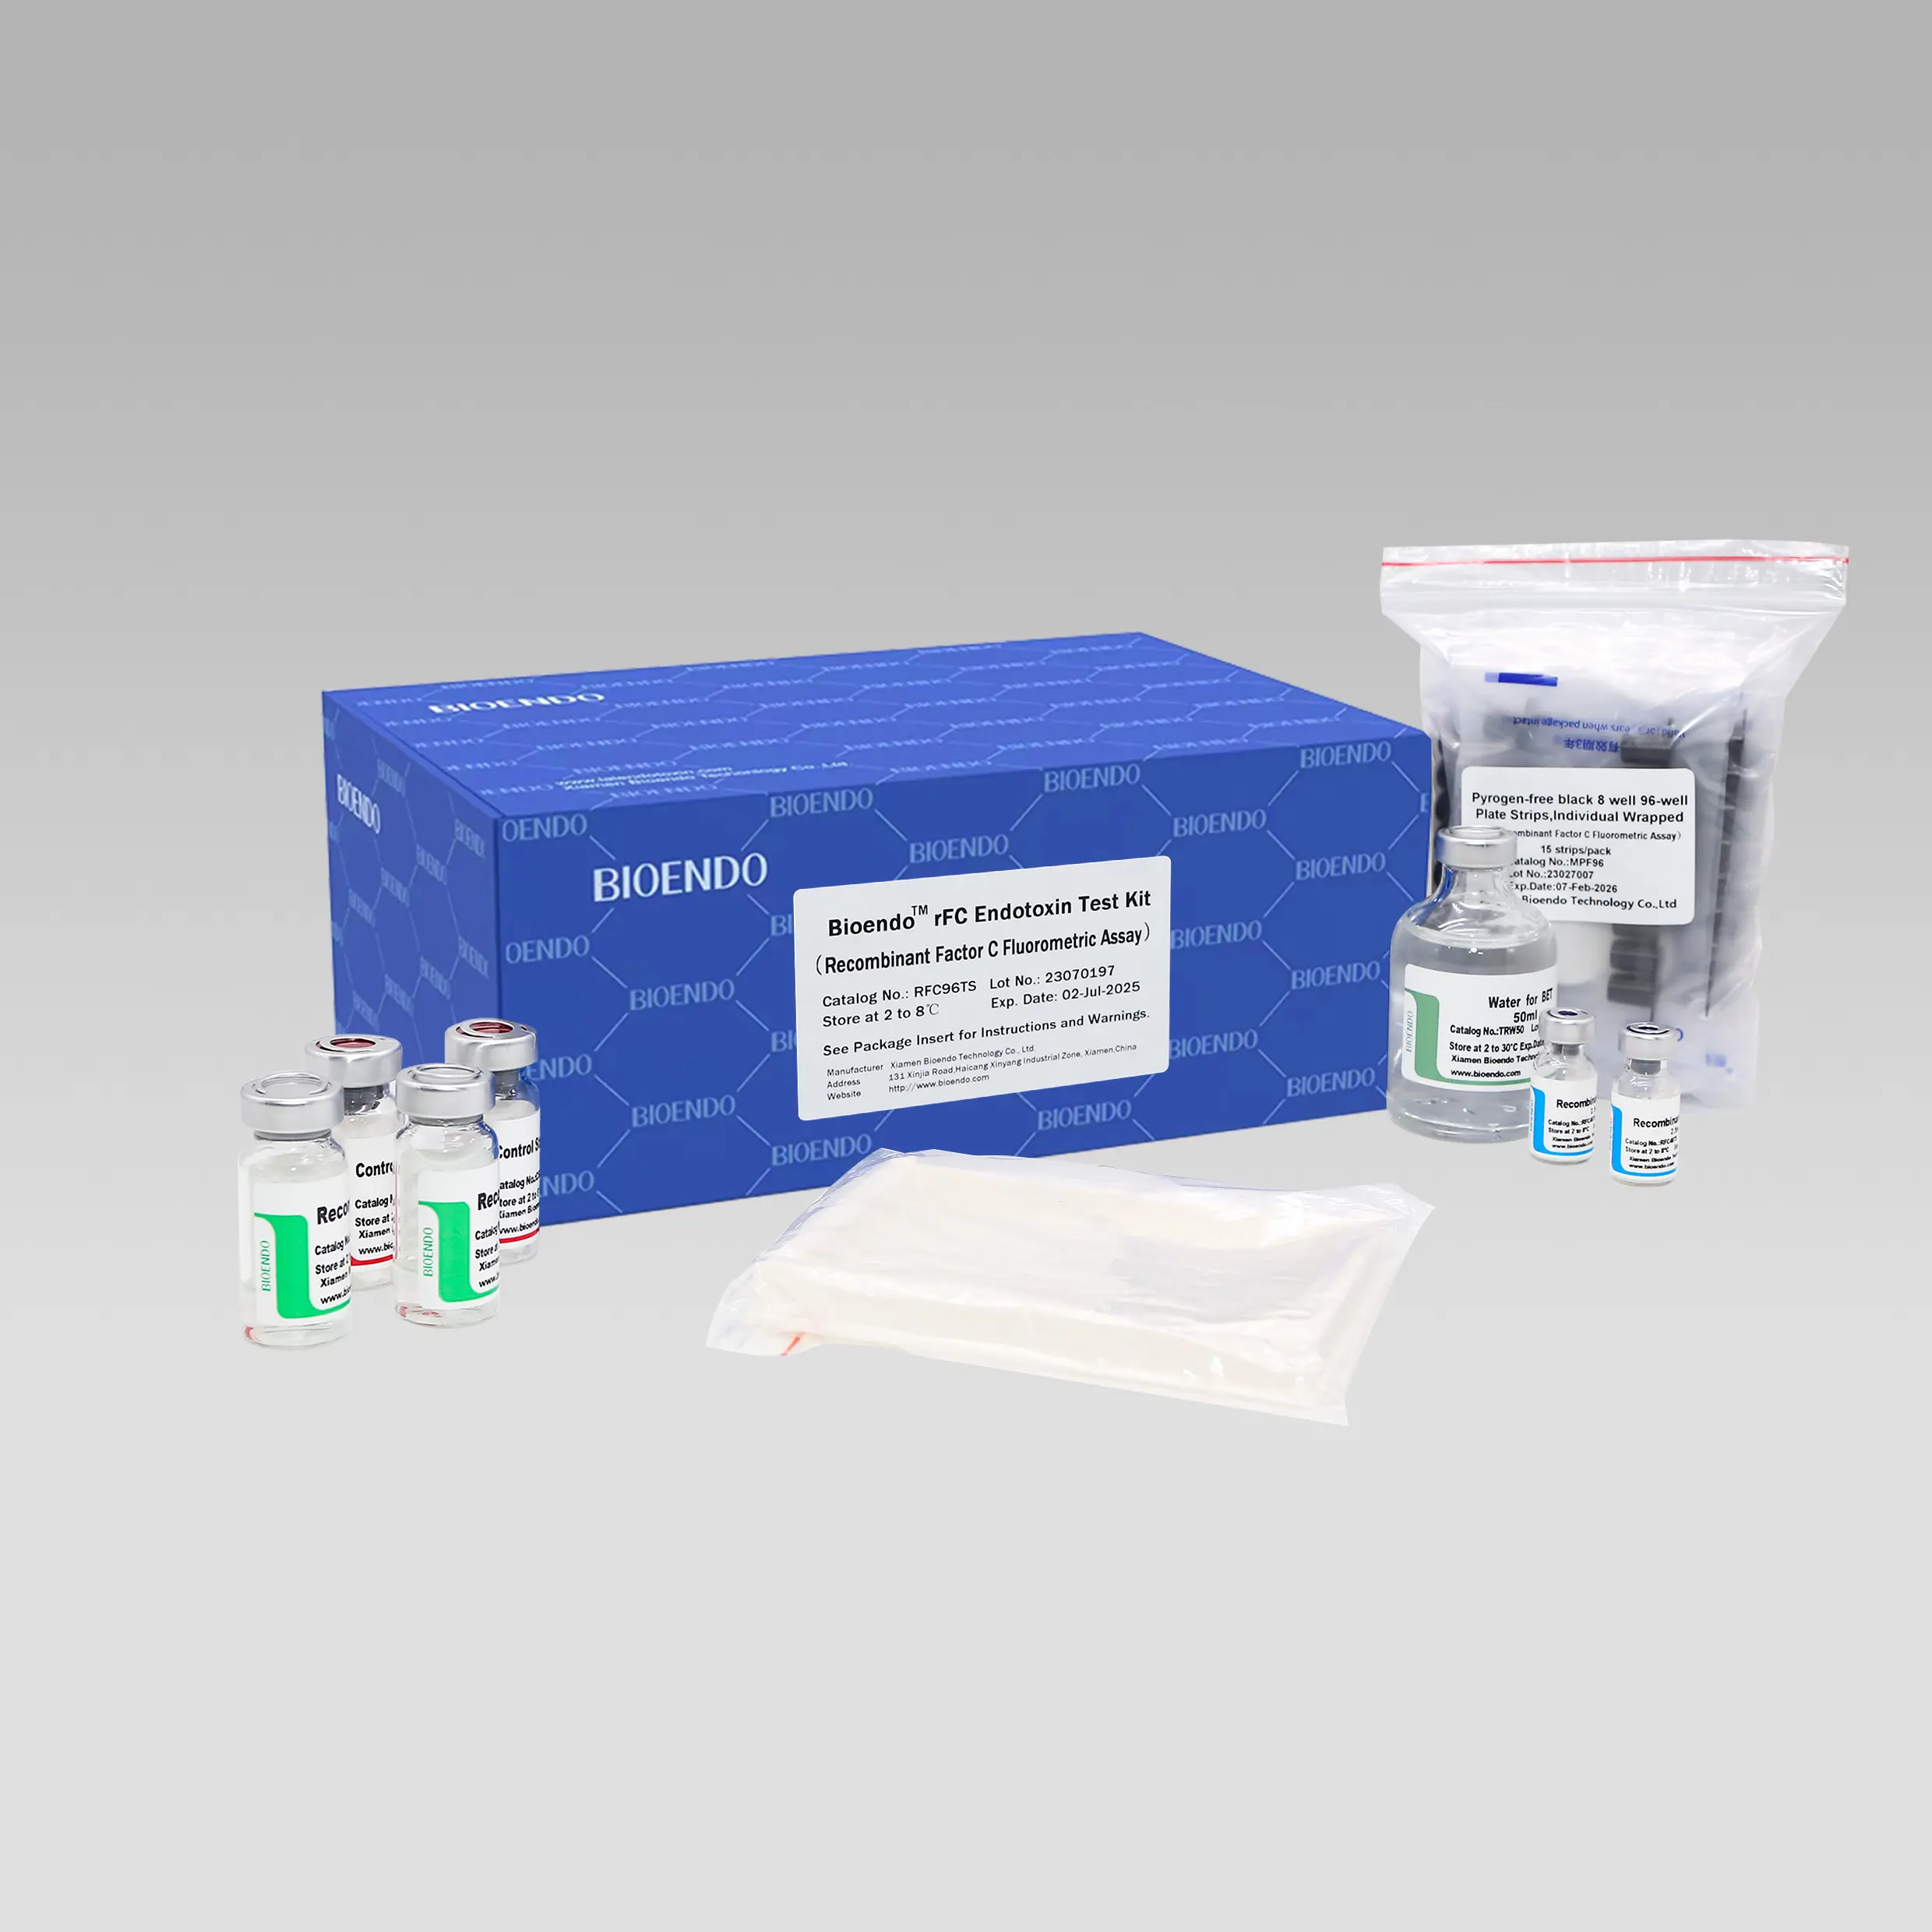 Bioendo™ rFC Endotoxin Test Kit